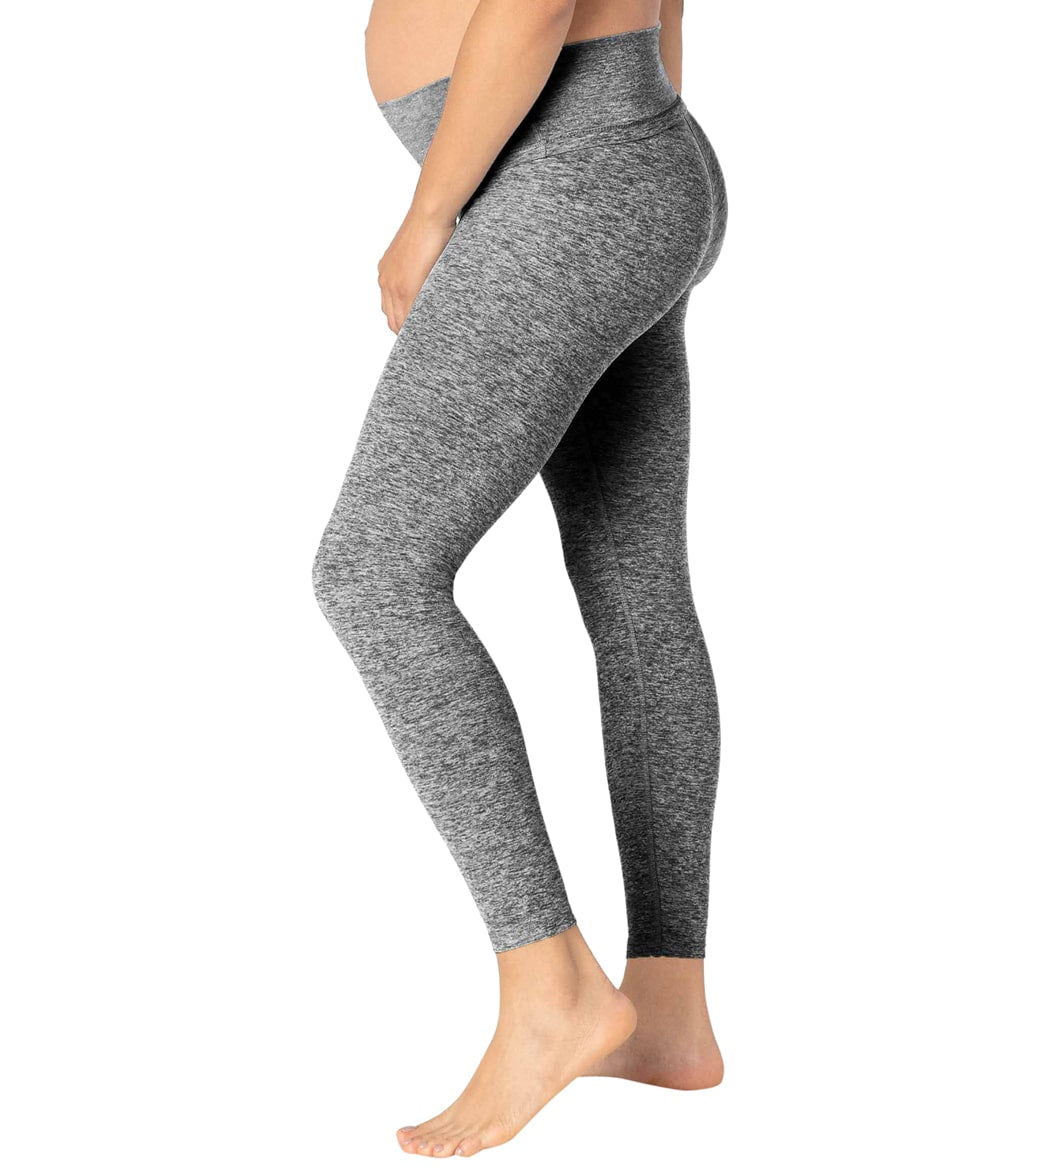 Beyond Yoga Spacedye Maternity Leggings AUBEE Size XS $105 | eBay